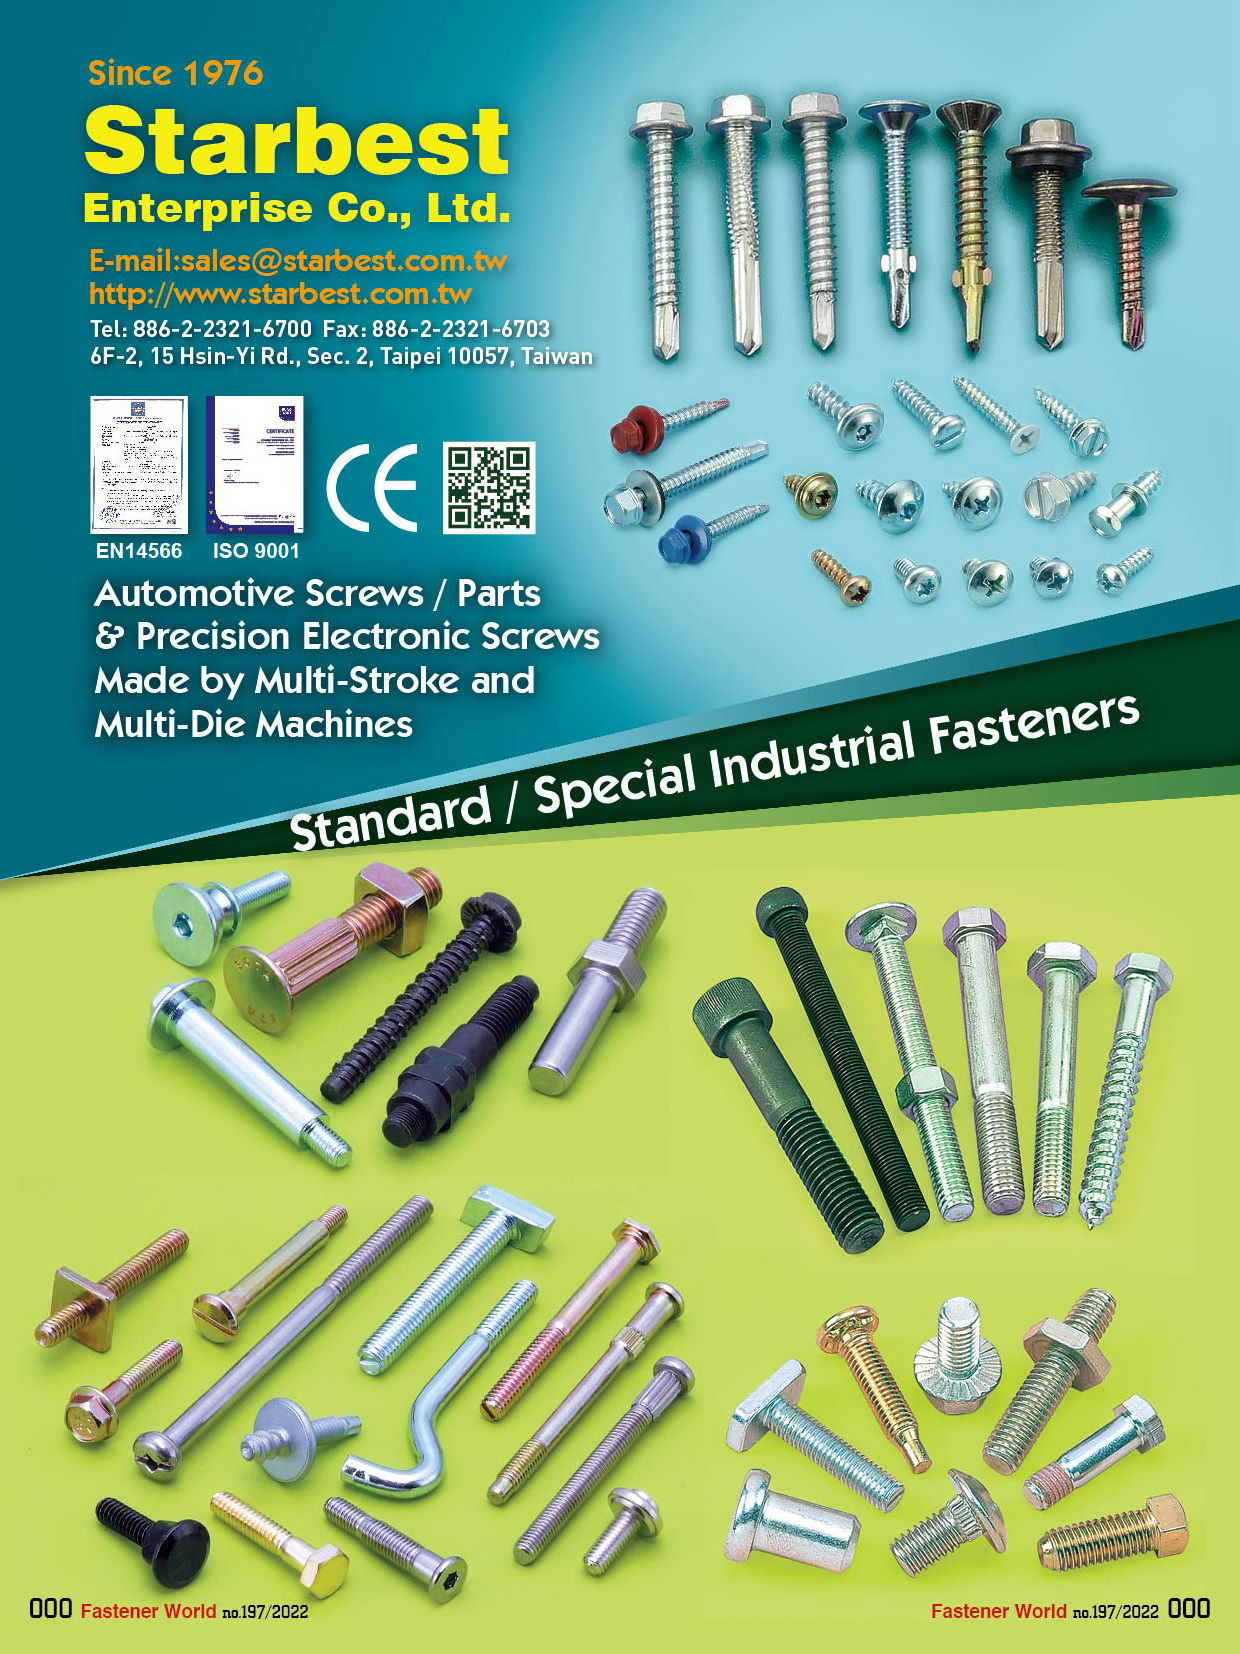 STARBEST ENTERPRISE CO., LTD.  , Automotive Screws / Parts & Precision Electronic Screws, Standard / Special Industrial Fasteners